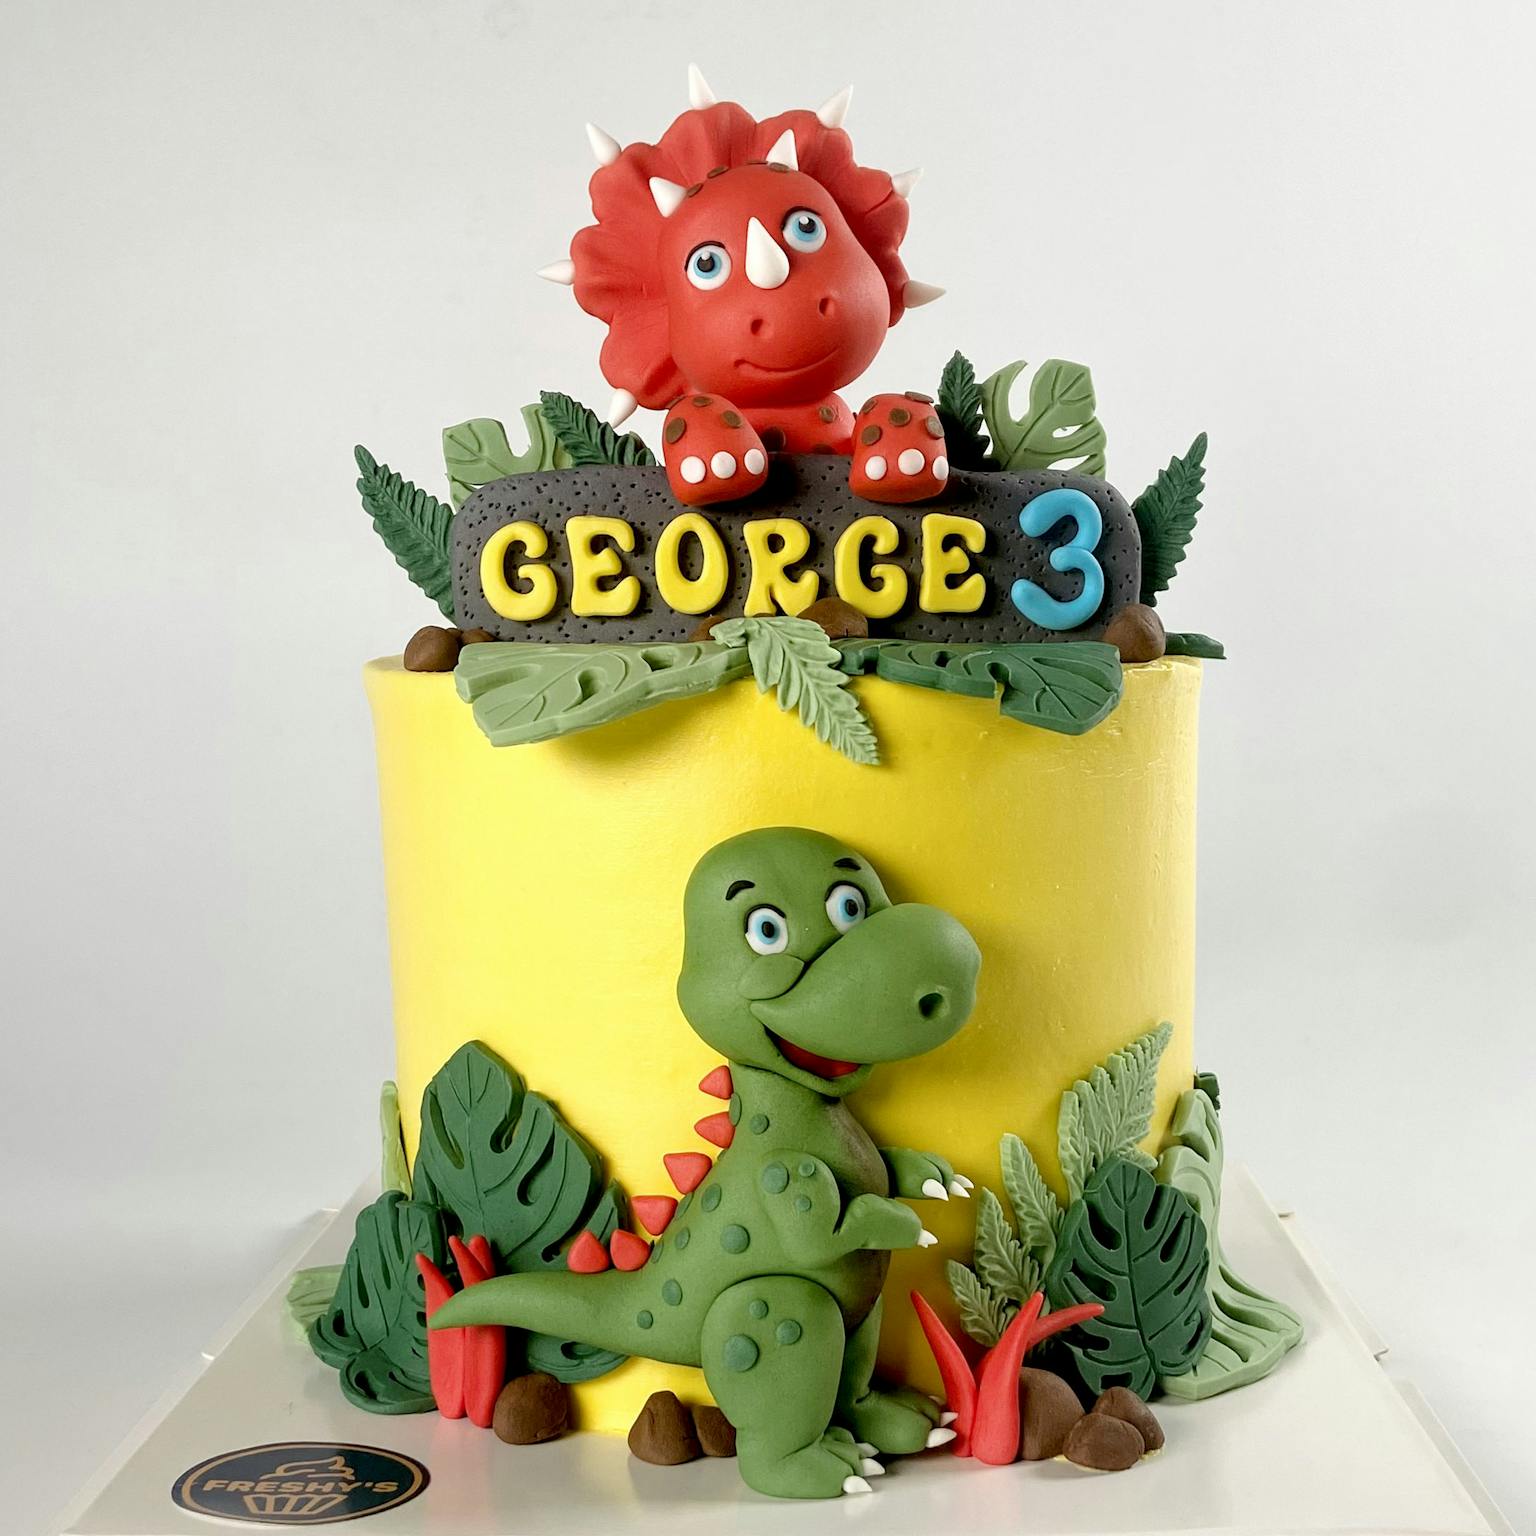 100% edible fondant sculpted dinosaur birthday cake